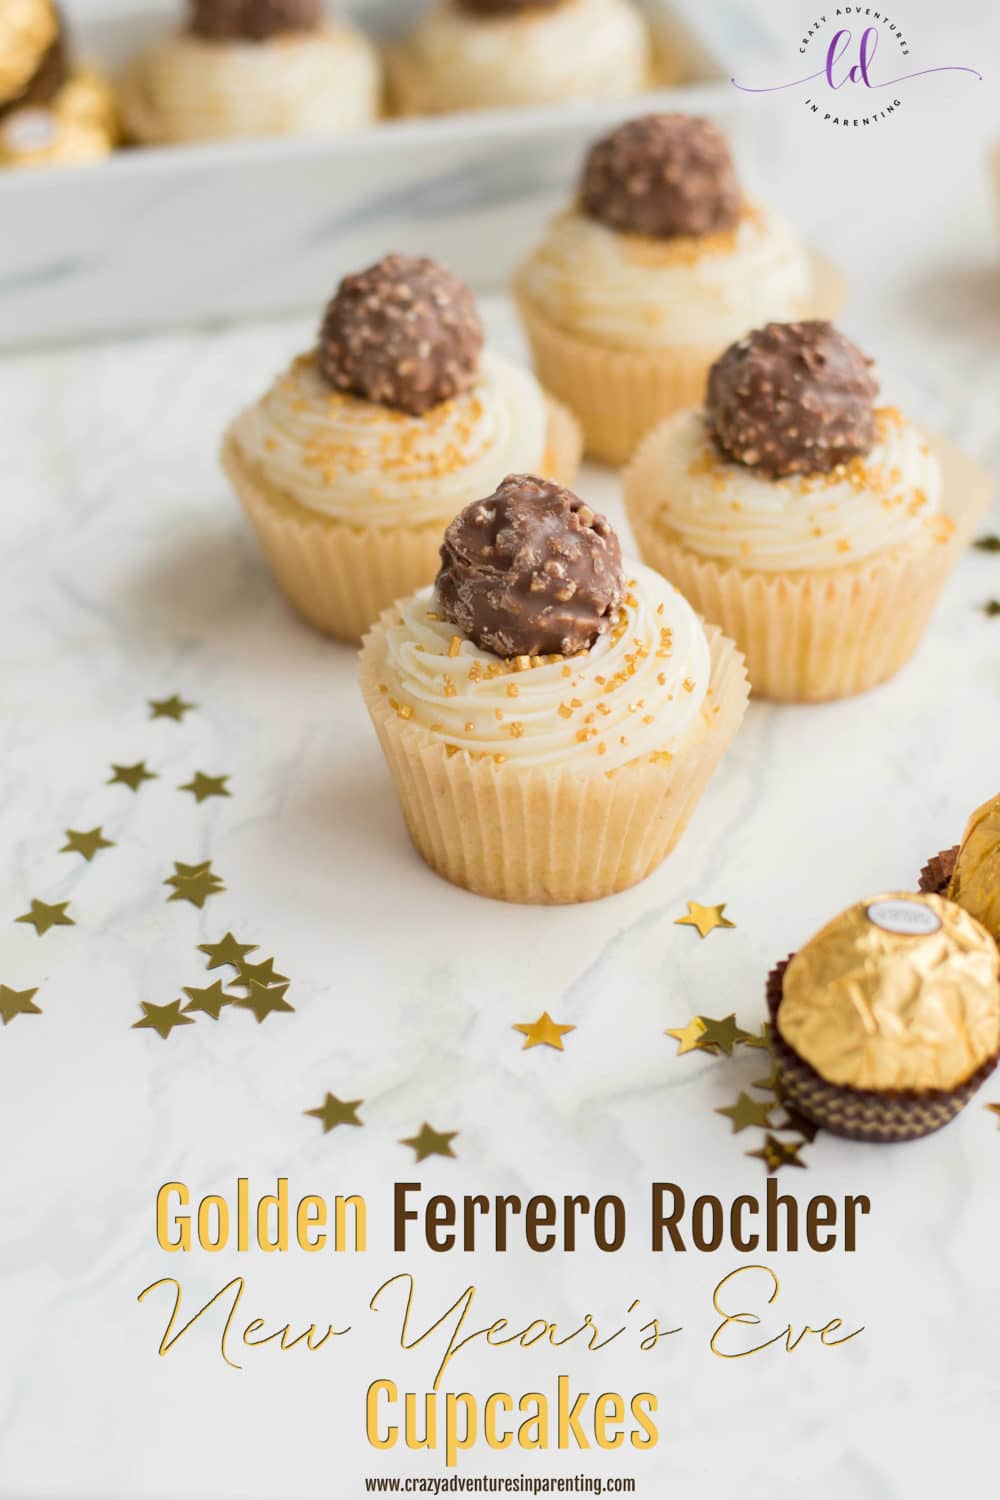 Golden Ferrero Rocher New Year's Eve Cupcakes